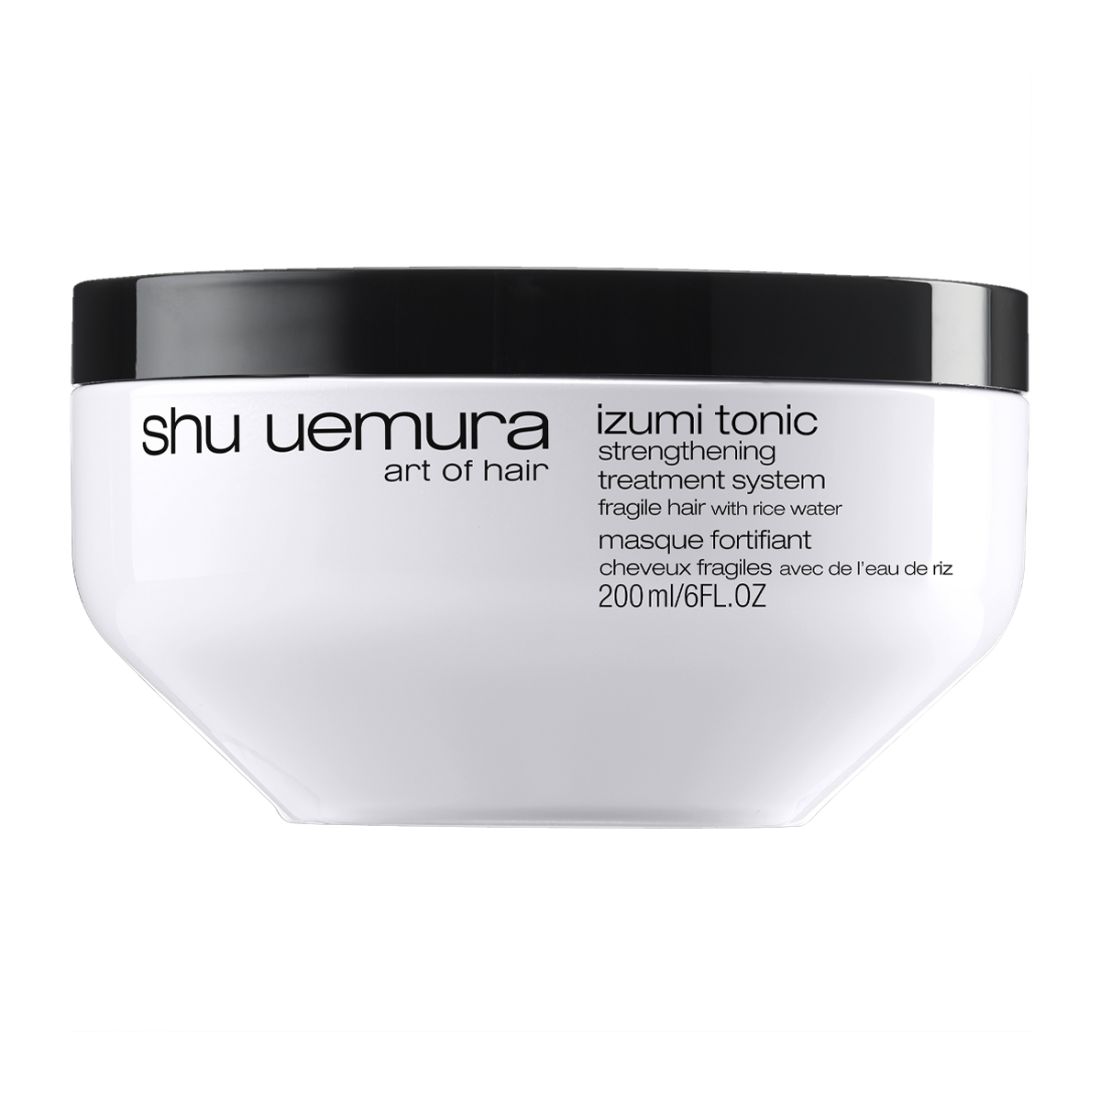 Shu Uemura Izumi Tonic Strengthening Treatment Mask 200ml